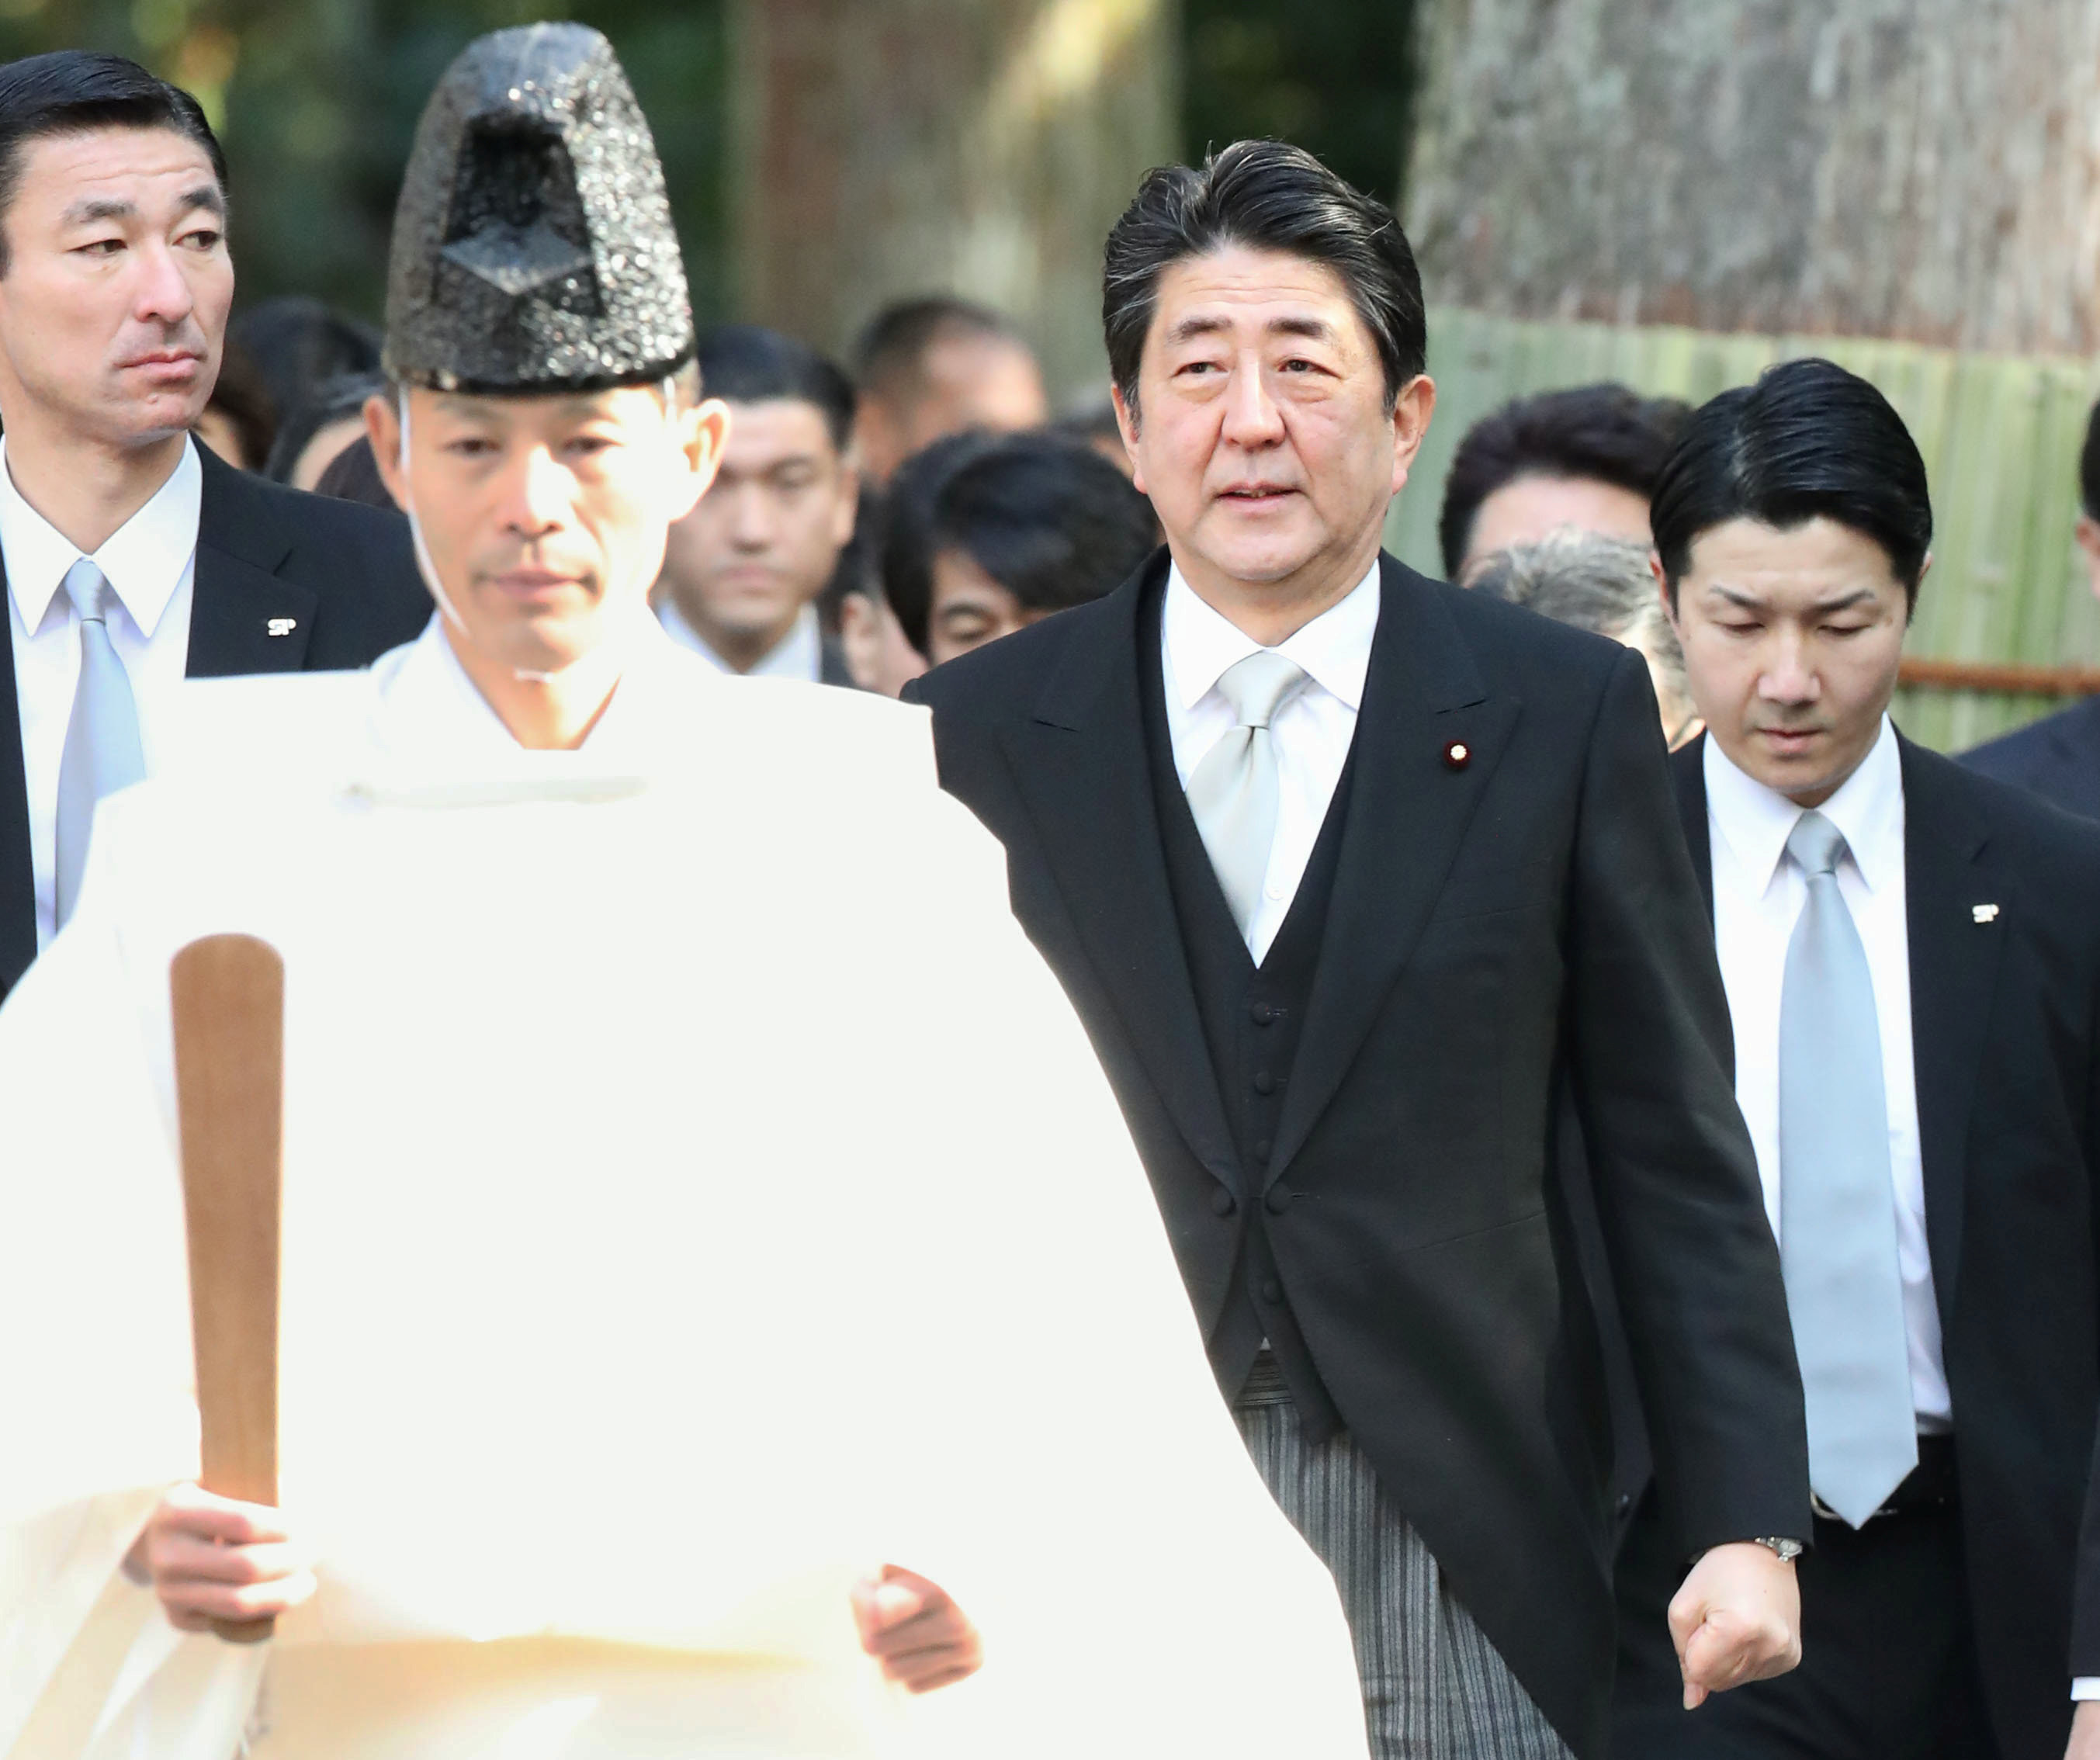 Japan faces greatest danger since World War due to N.Korea - PM